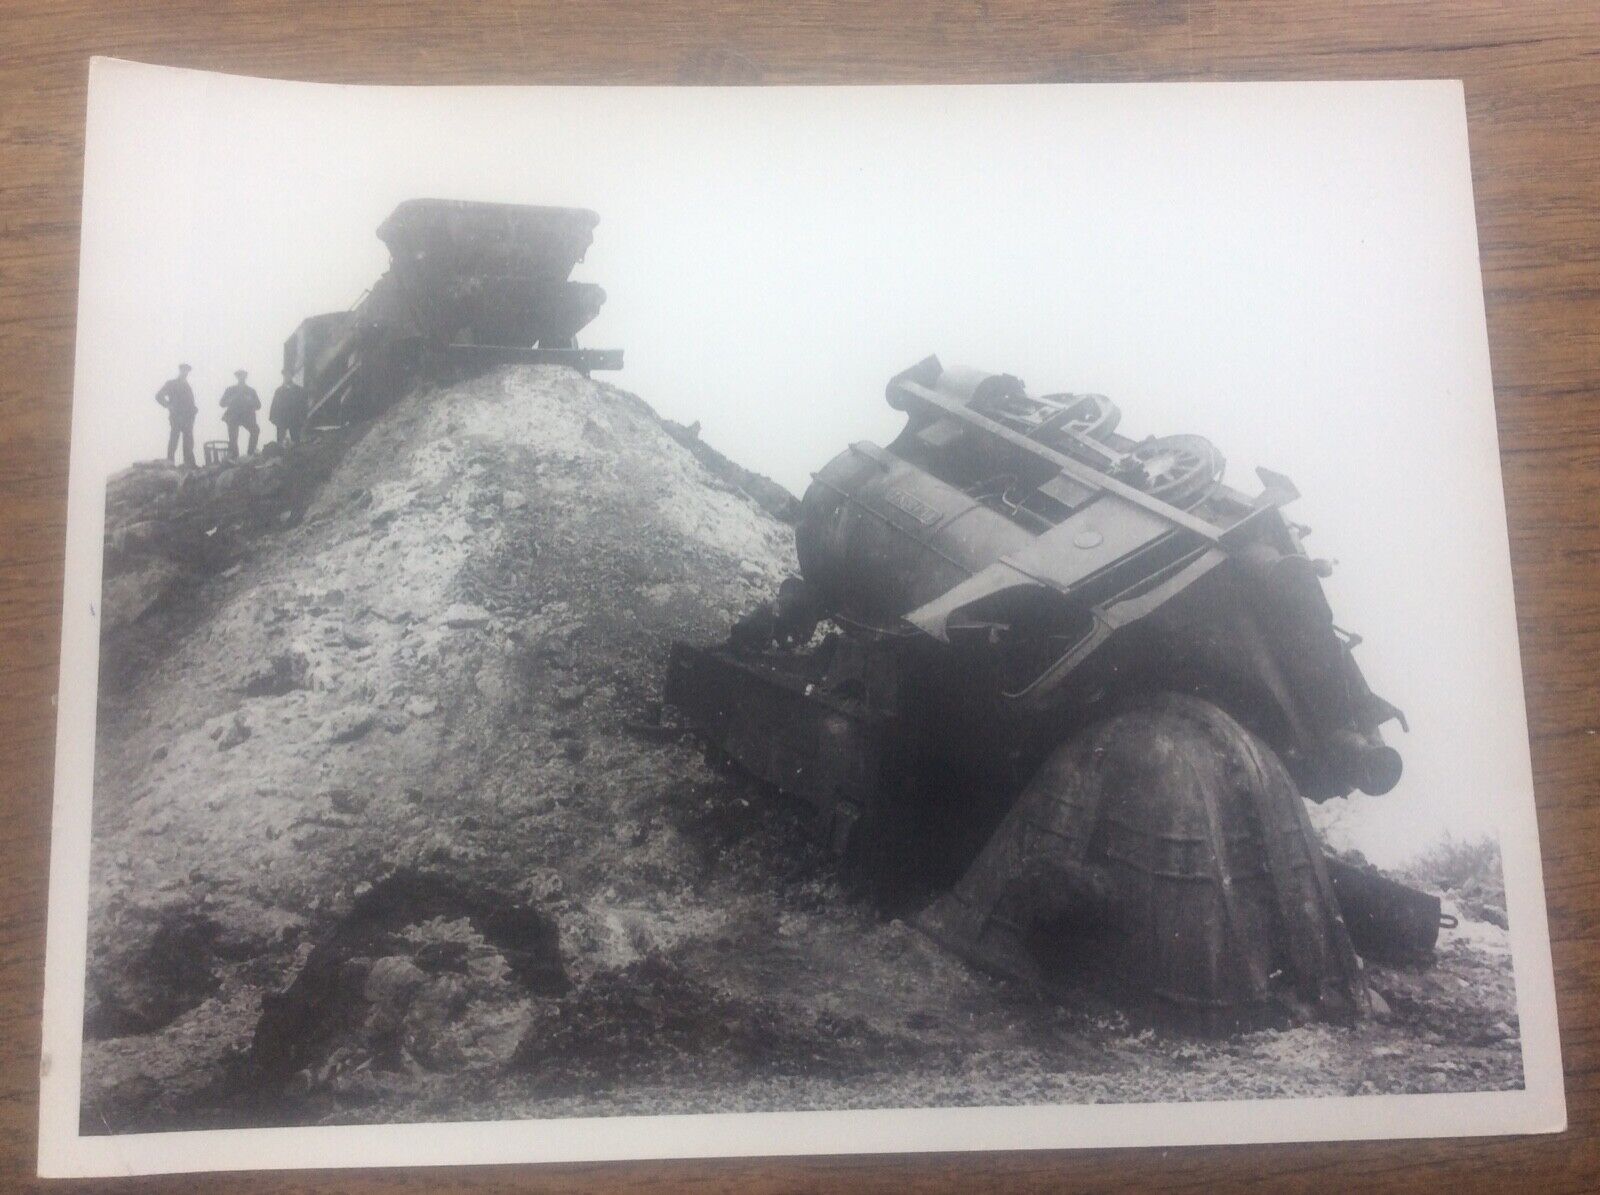 Scunthorpe British Steel Photograph Print Disaster Accident Railway JL Ltd  8x6”